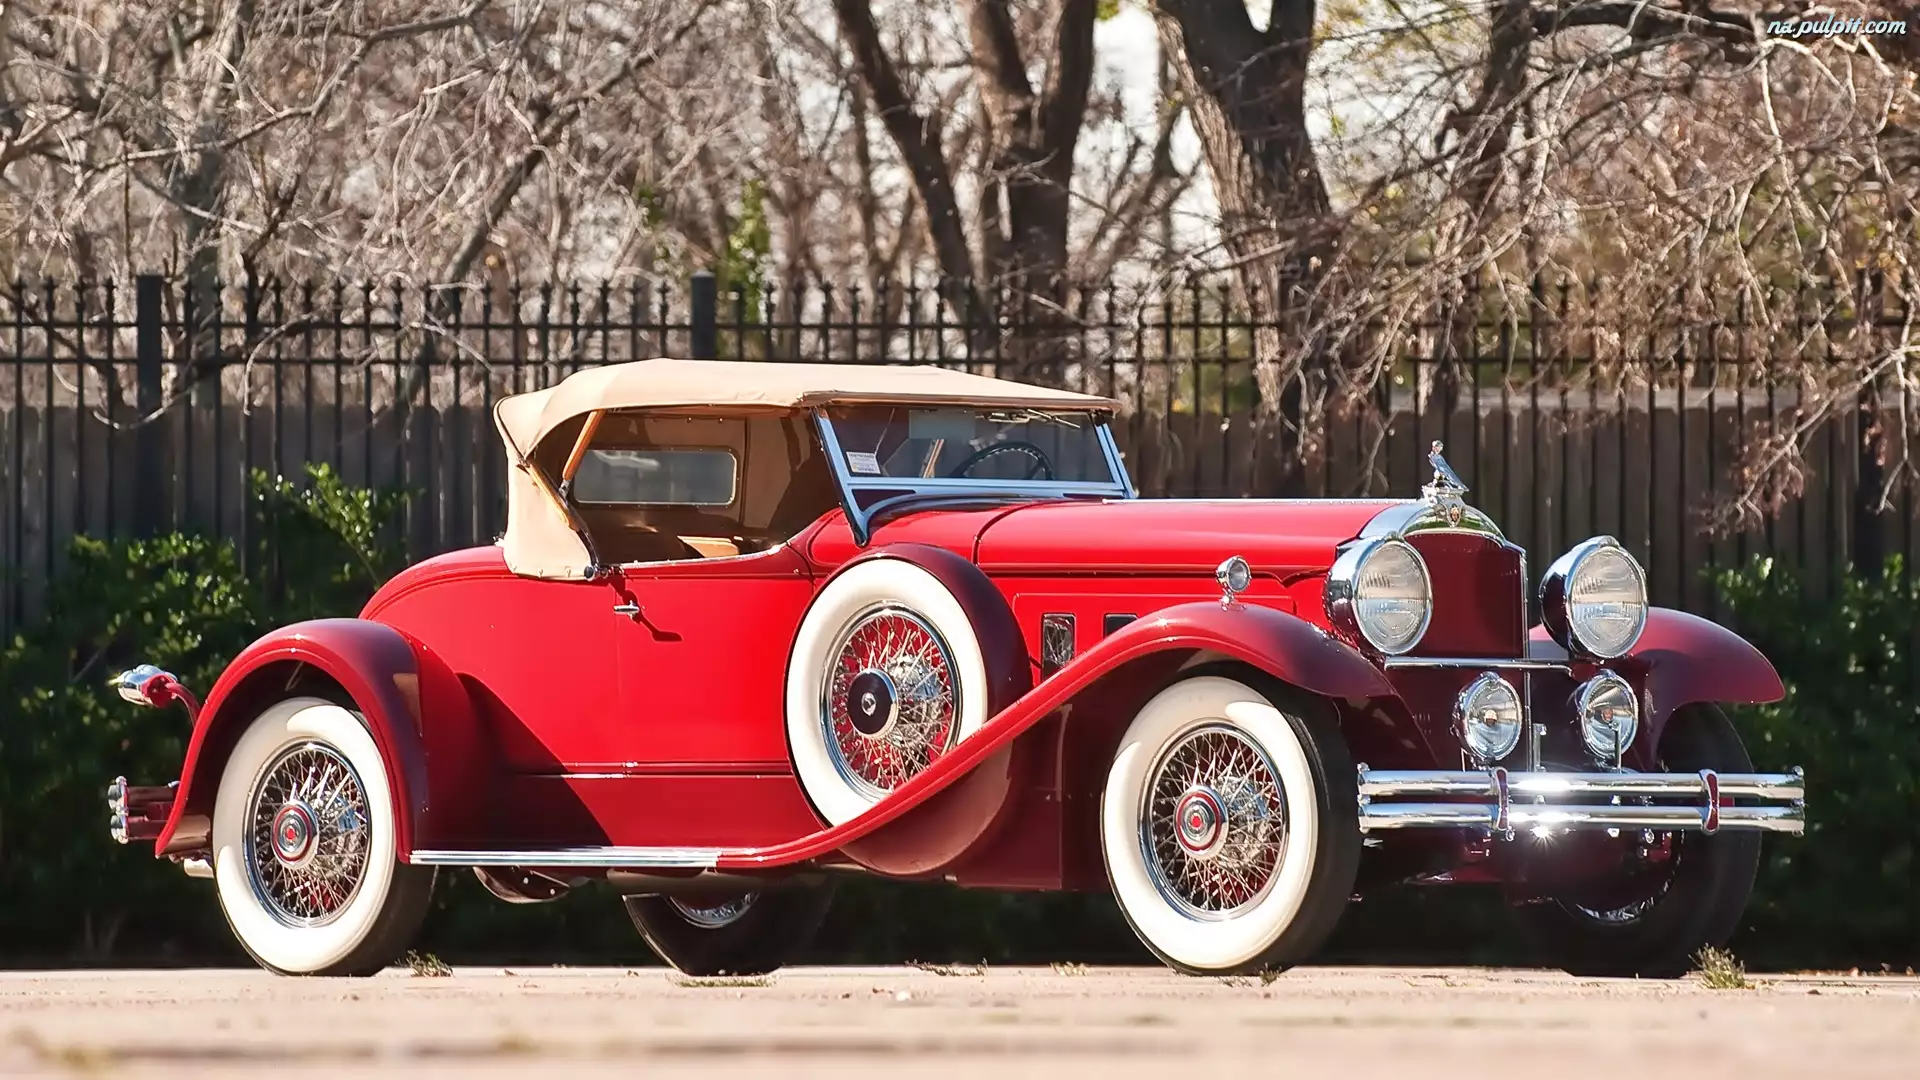 1940, Samochód, Packard, Zabytkowy, Deluxe